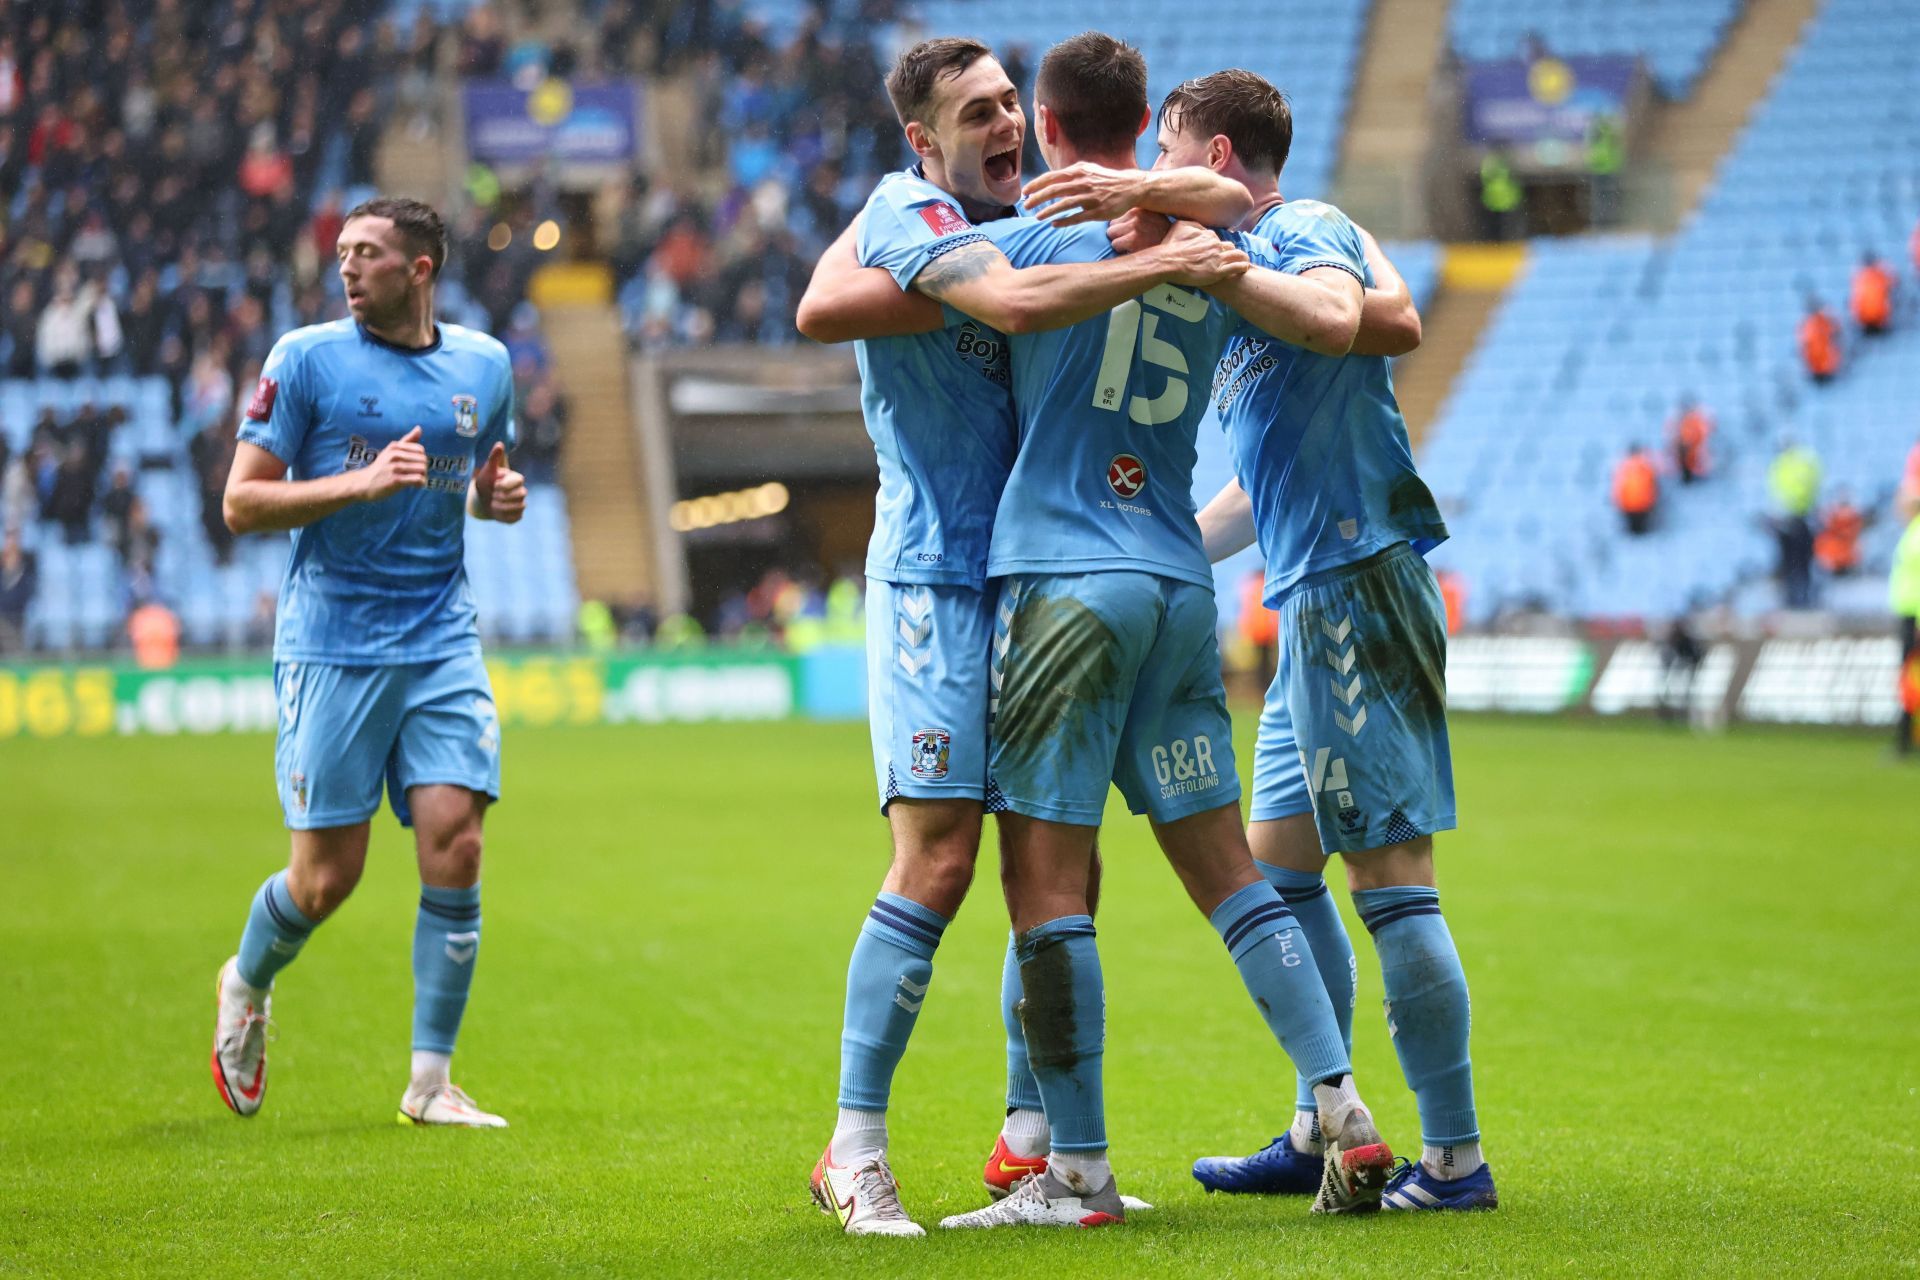 Coventry City will host Blackburn Rovers on Saturday